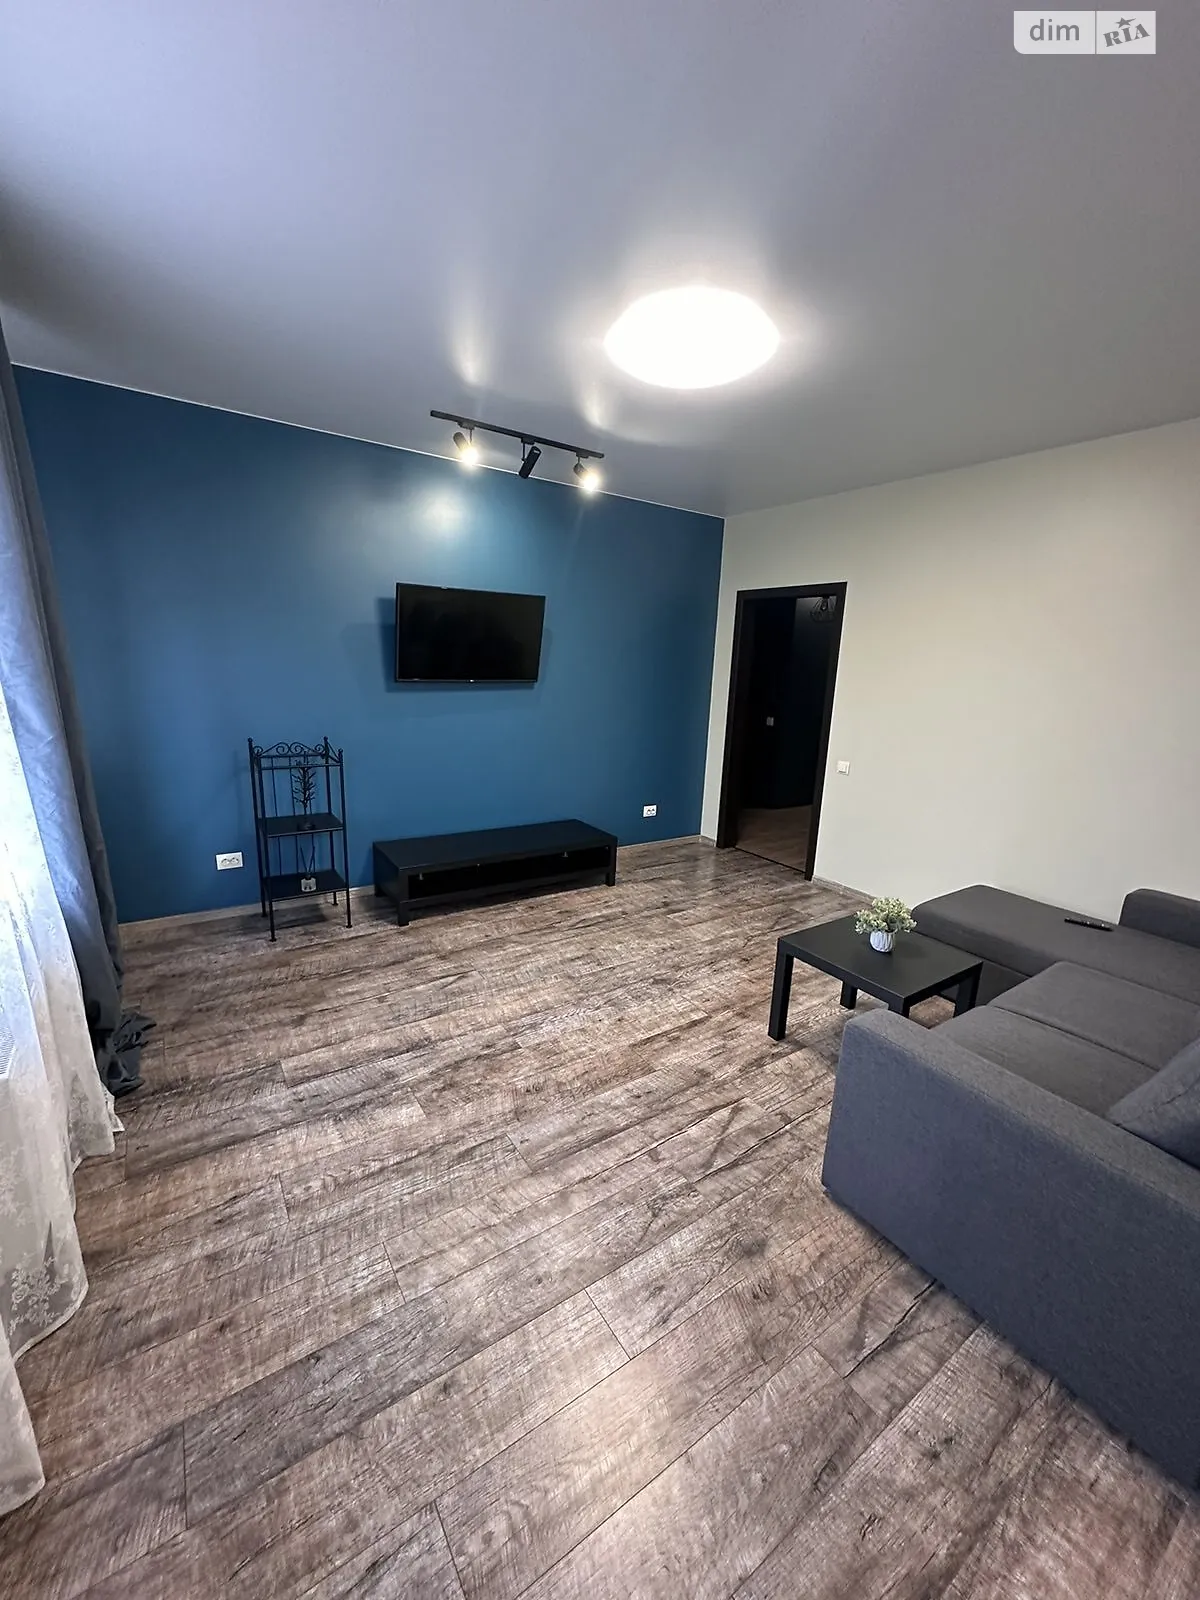 2-кімнатна квартира 65 кв. м у Луцьку, цена: 17000 грн